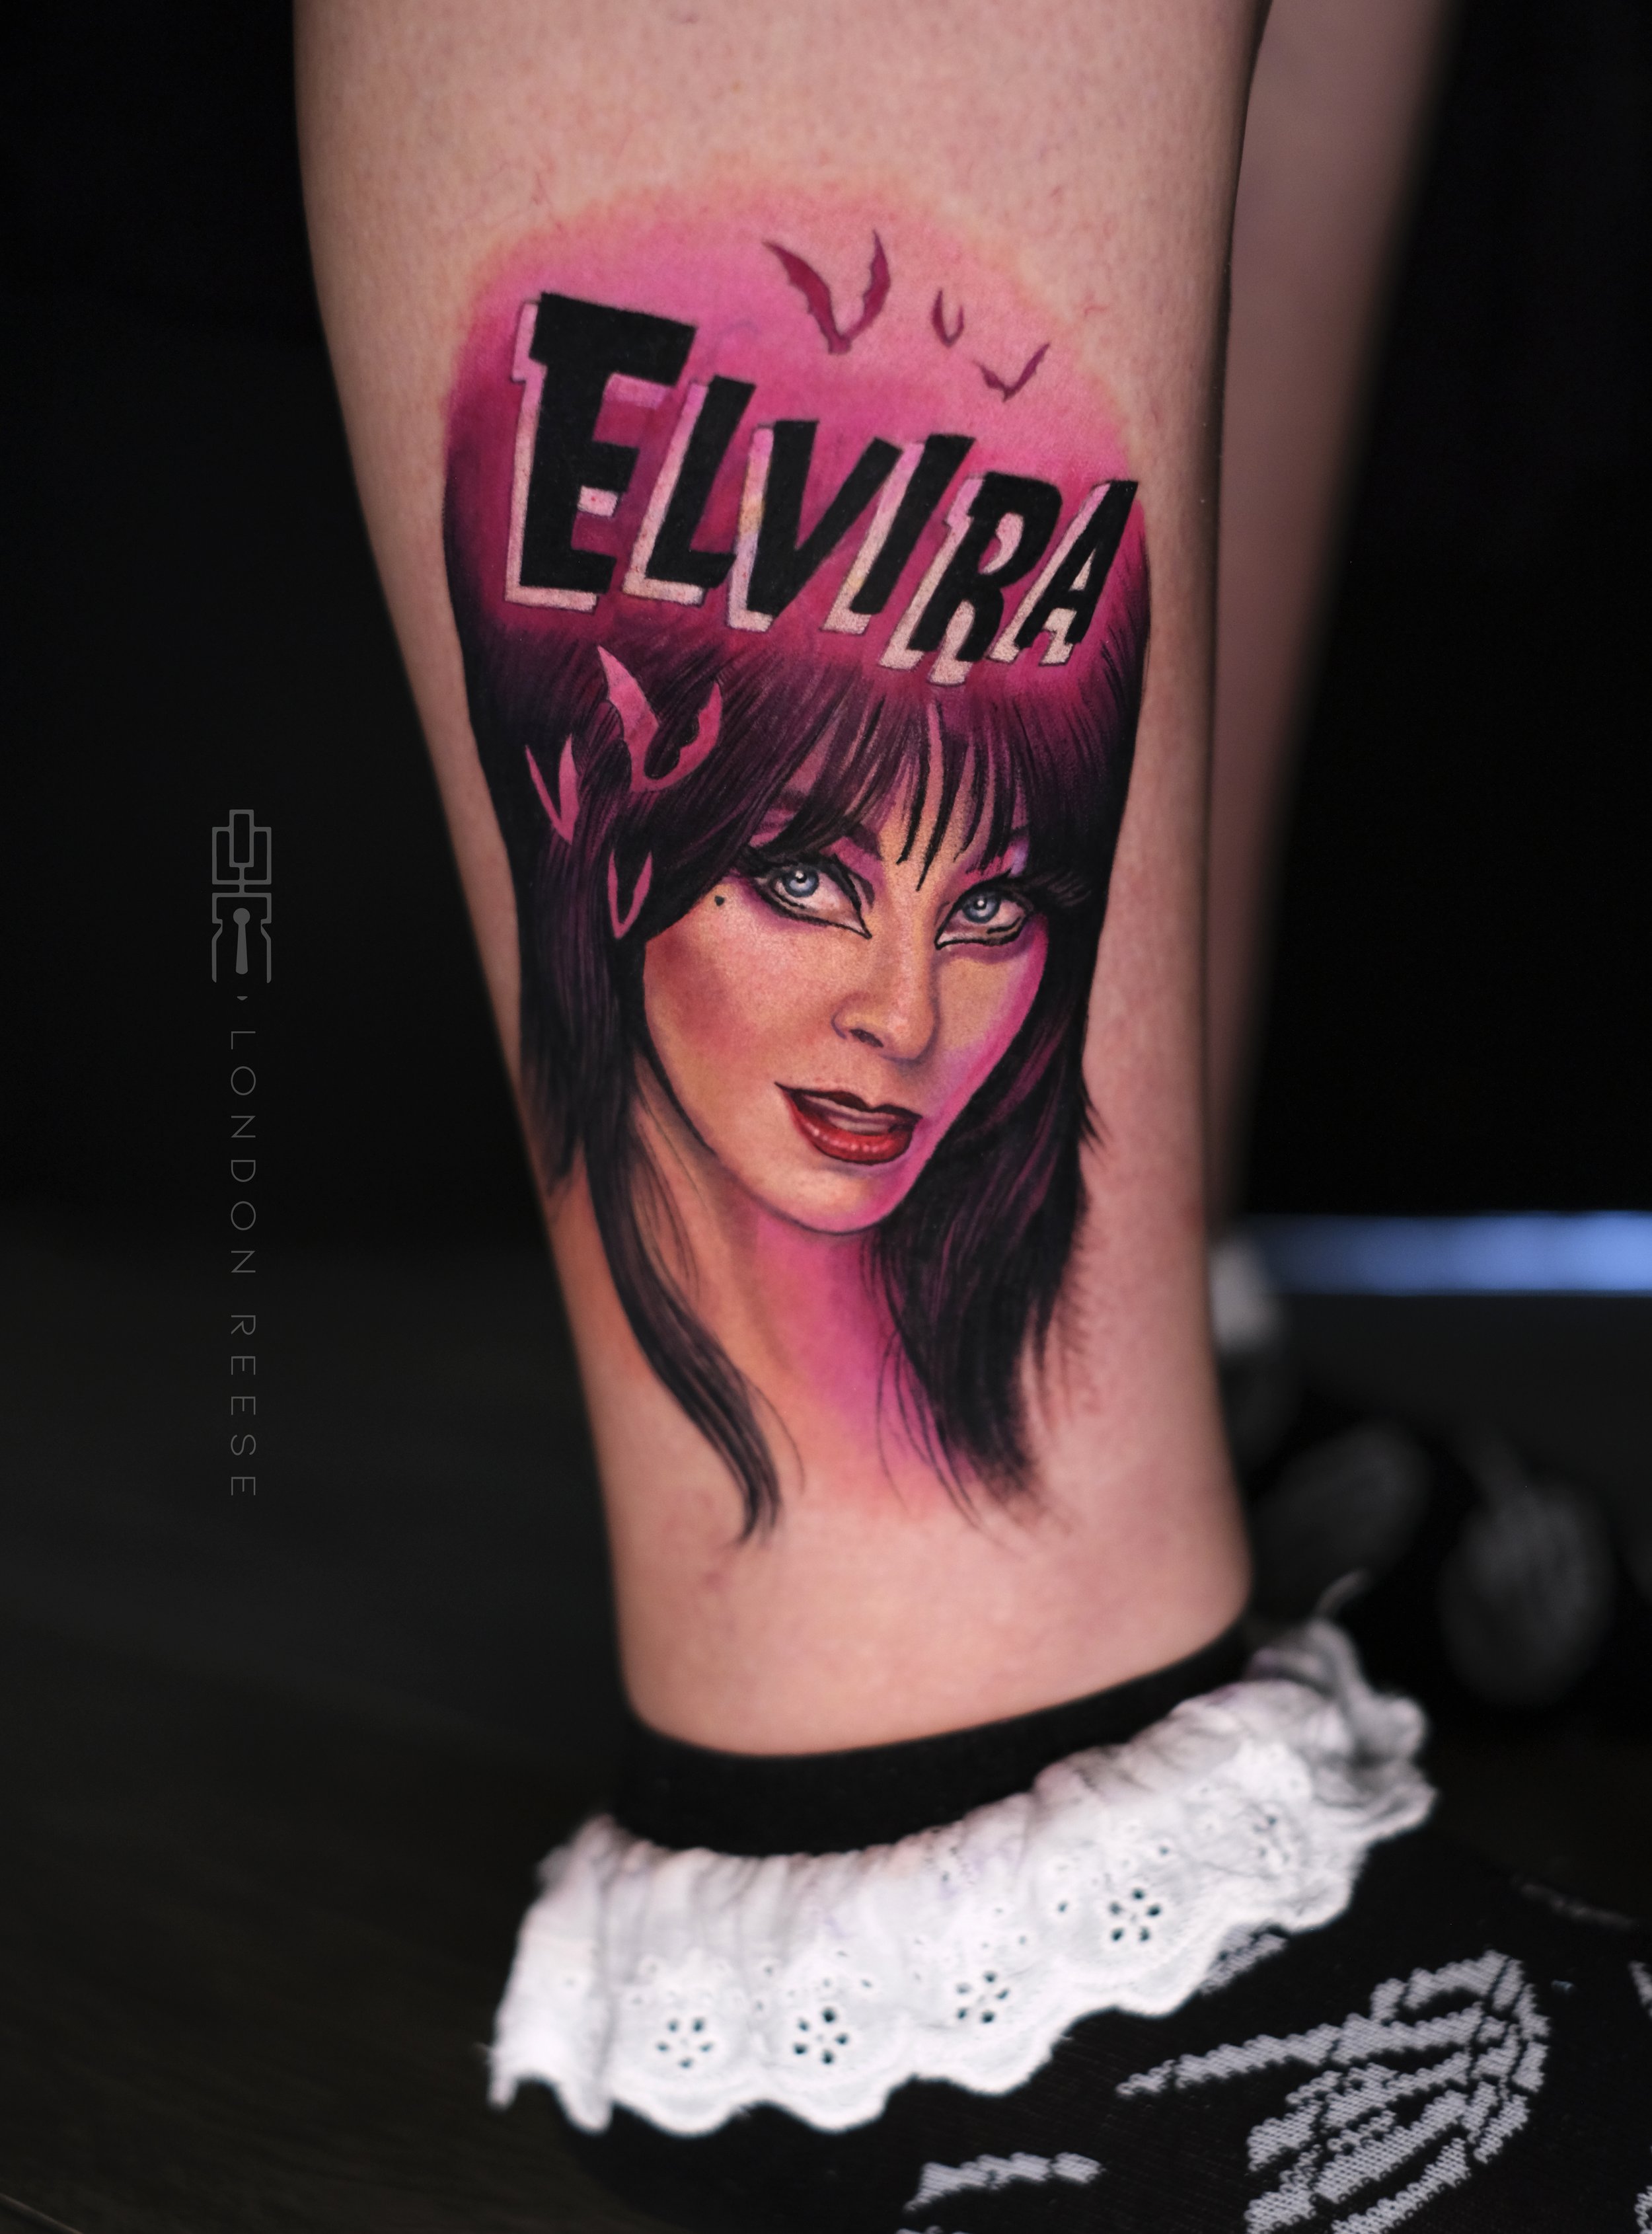 elvria cover up pink tattoo.jpg